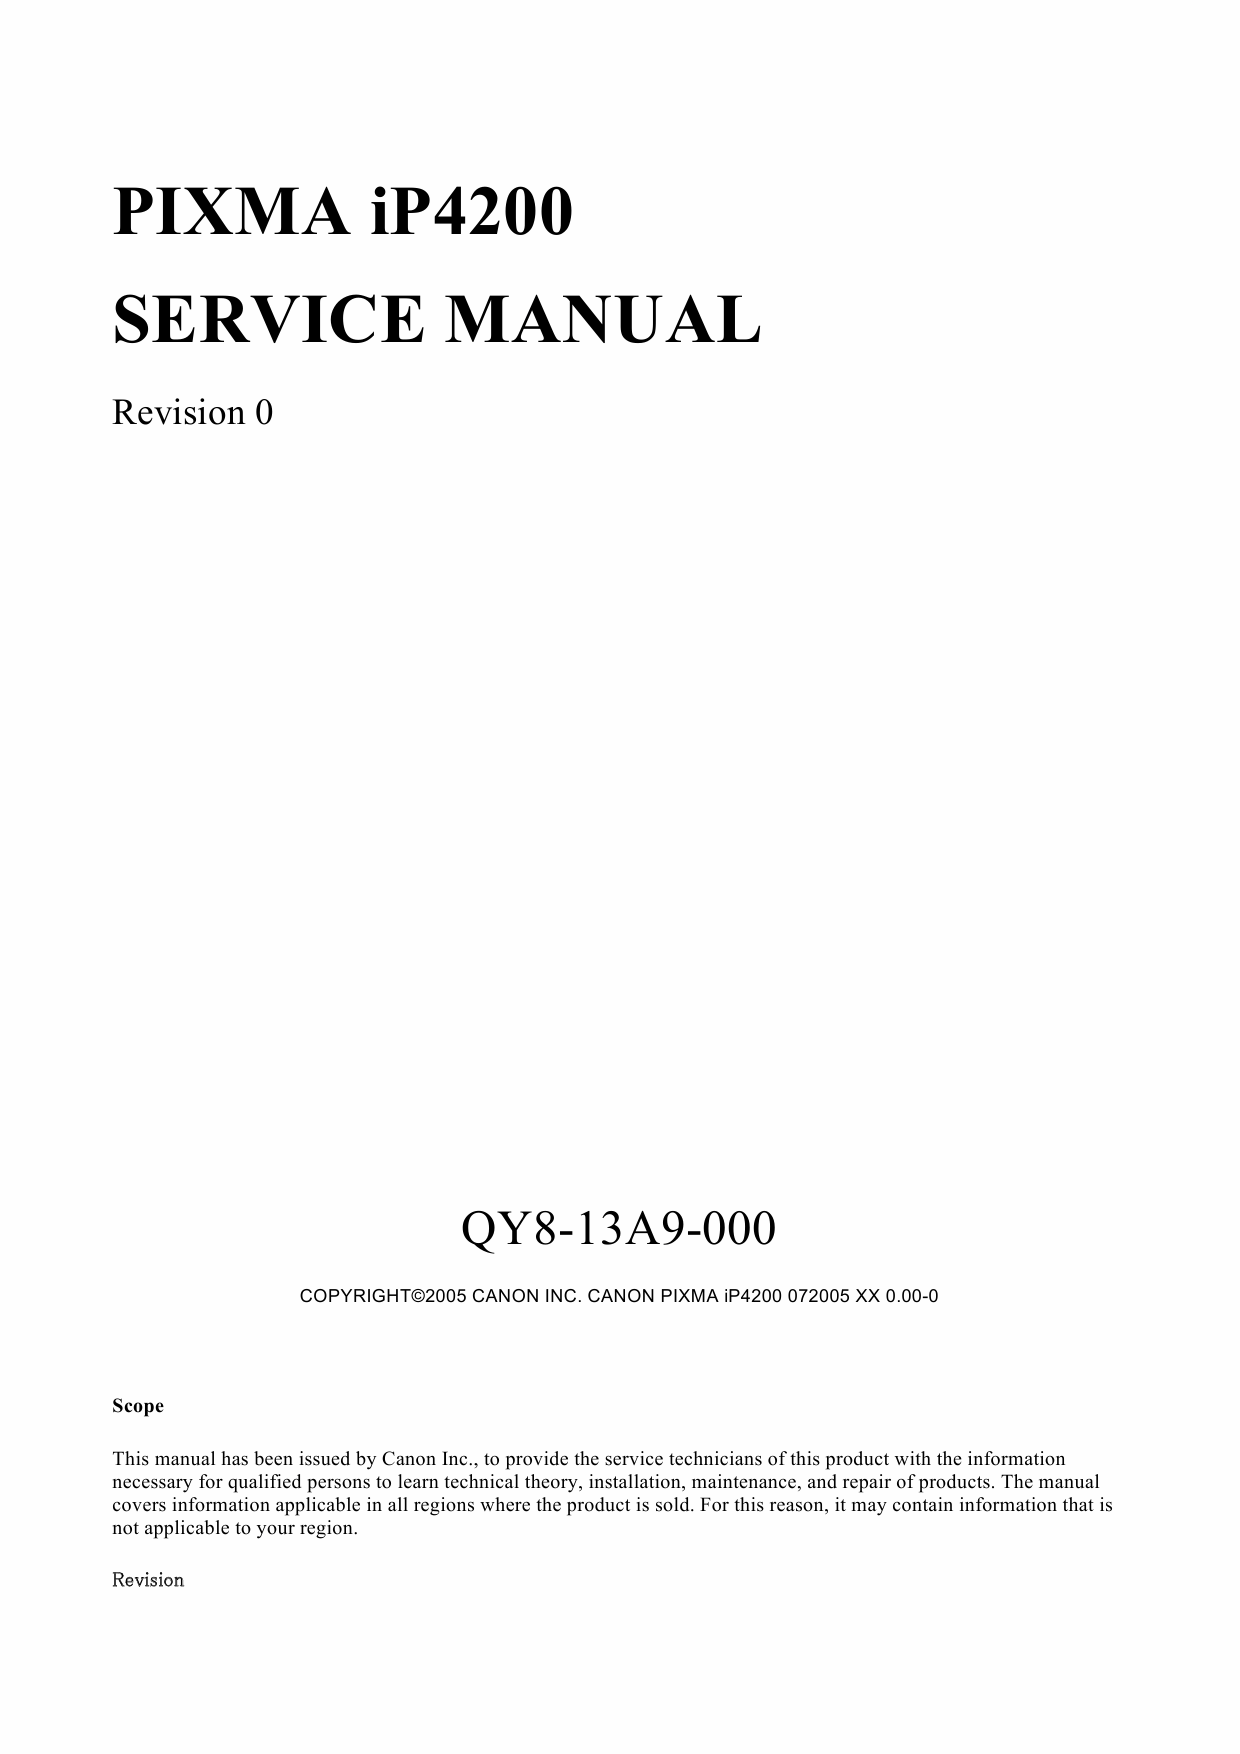 Canon PIXMA iP4200 Service Manual-1